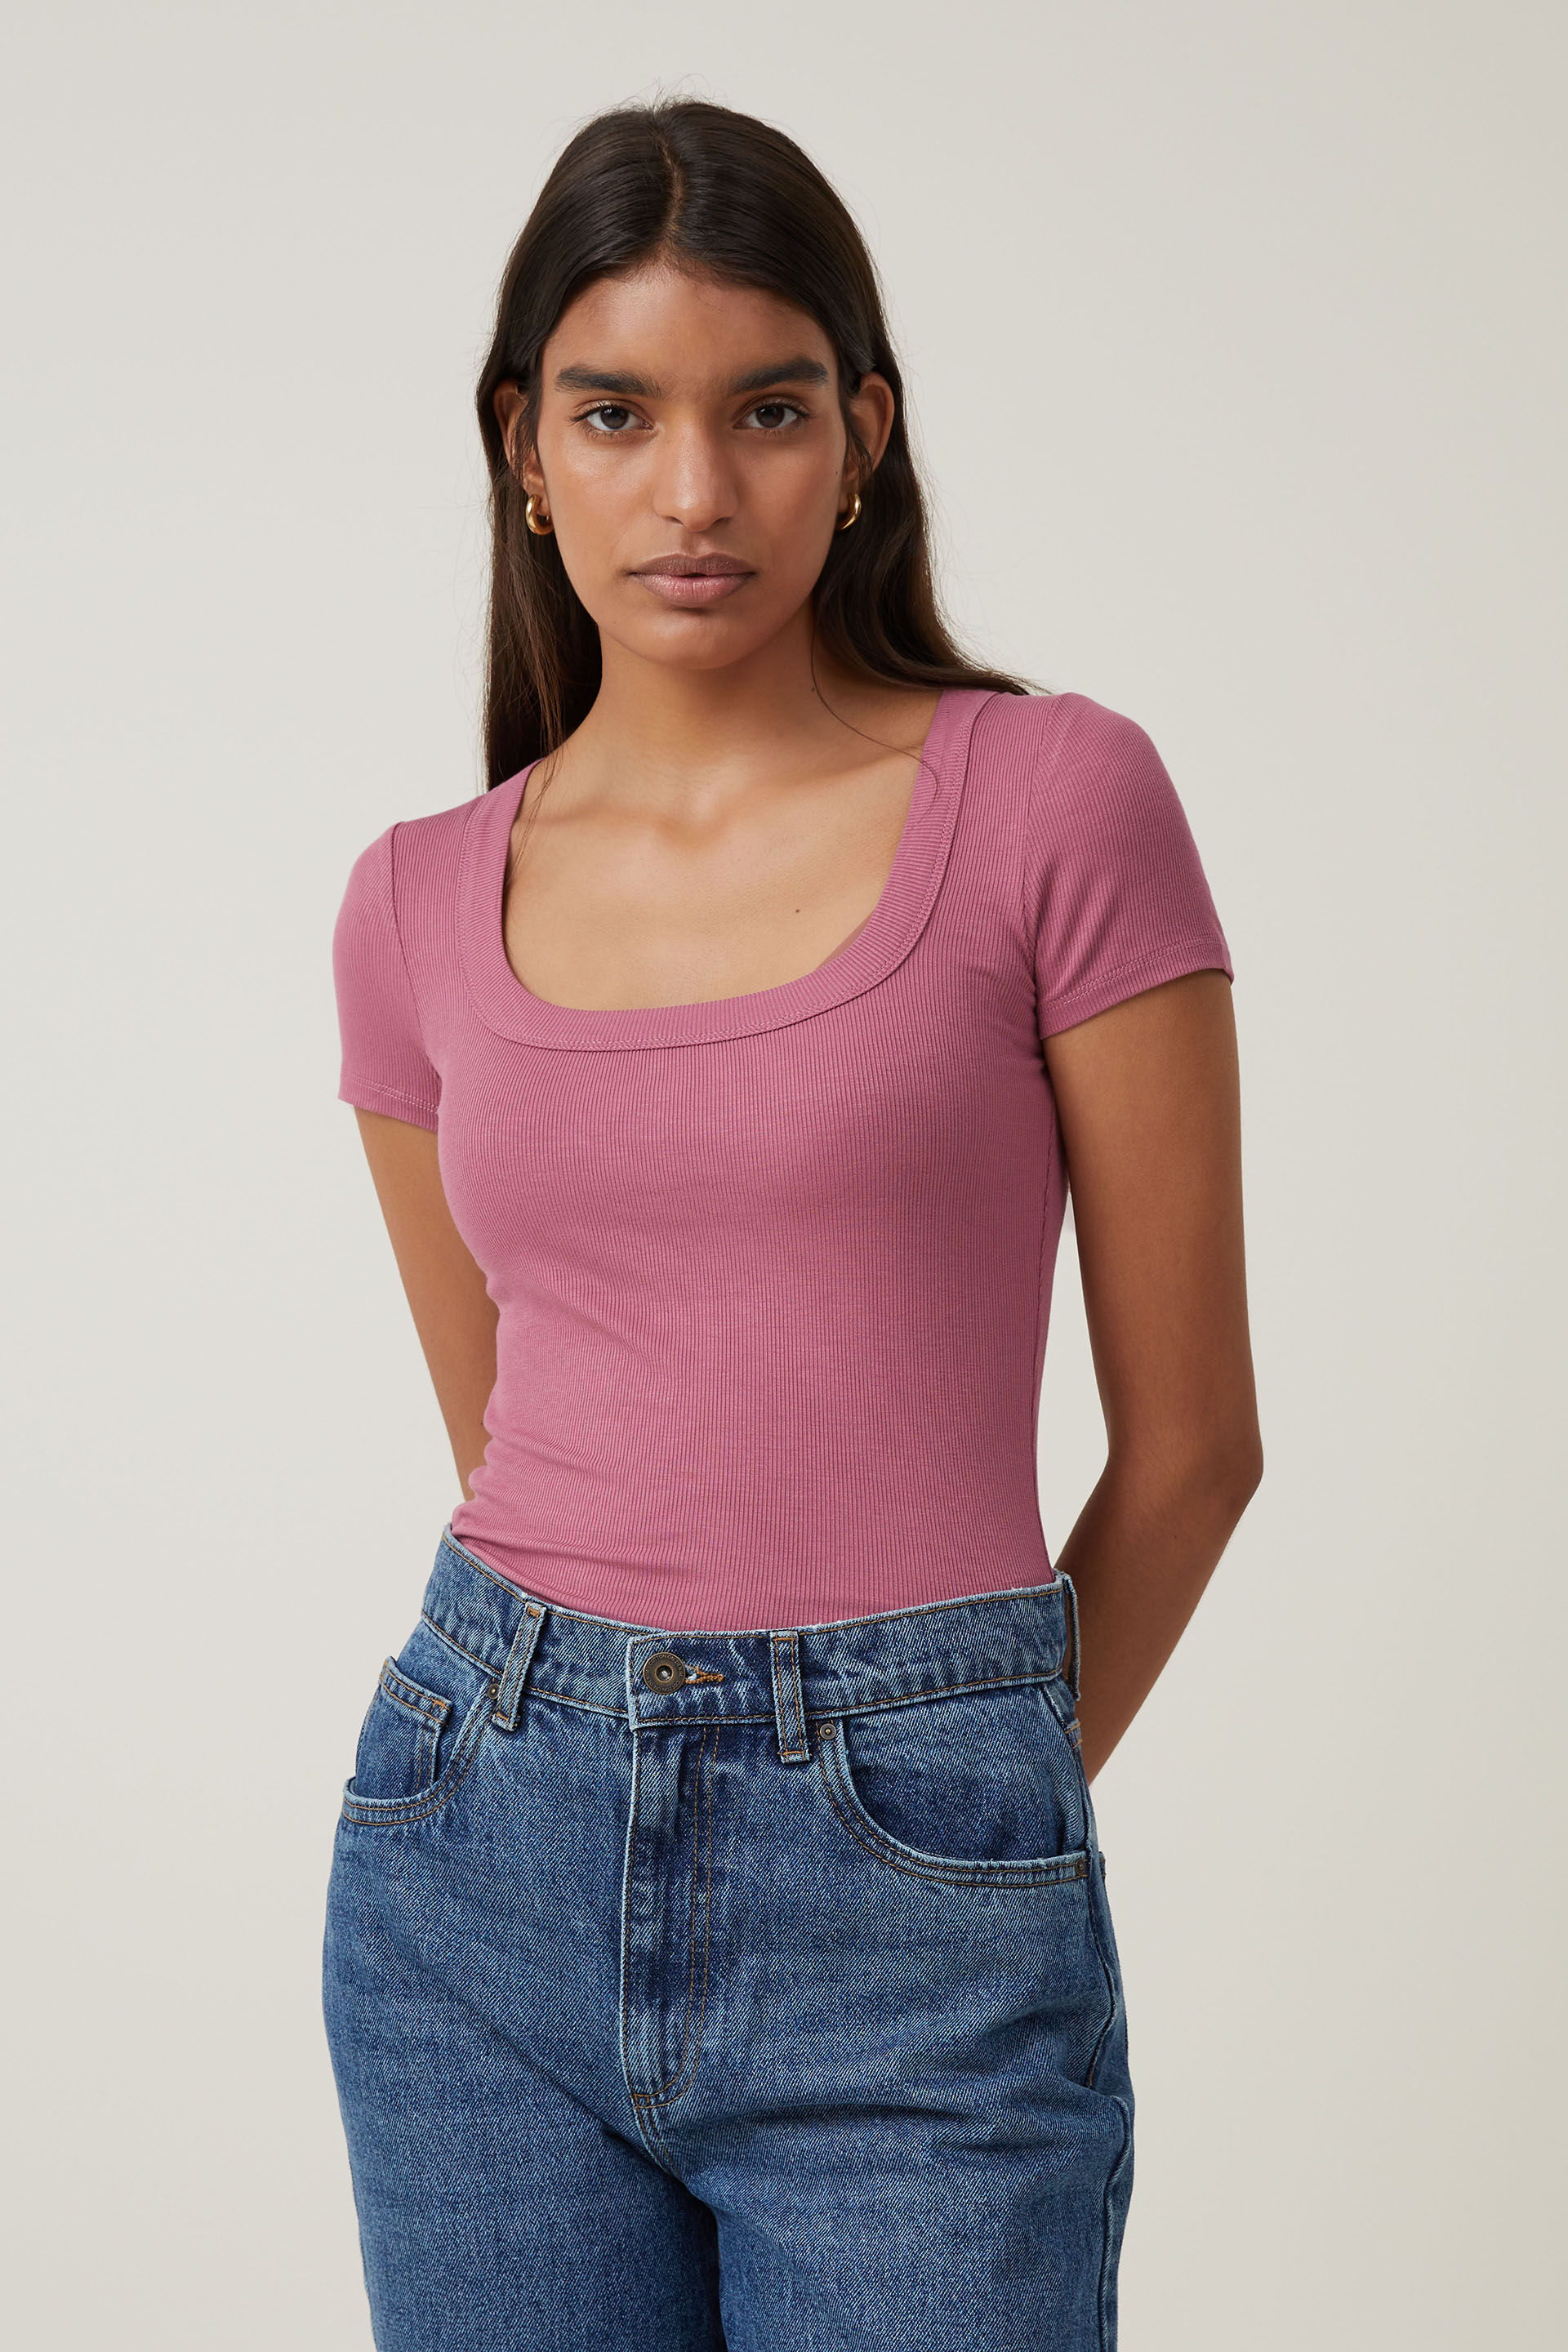 Cotton On Women - Staple Rib Scoop Neck Short Sleeve Top - Soft berry